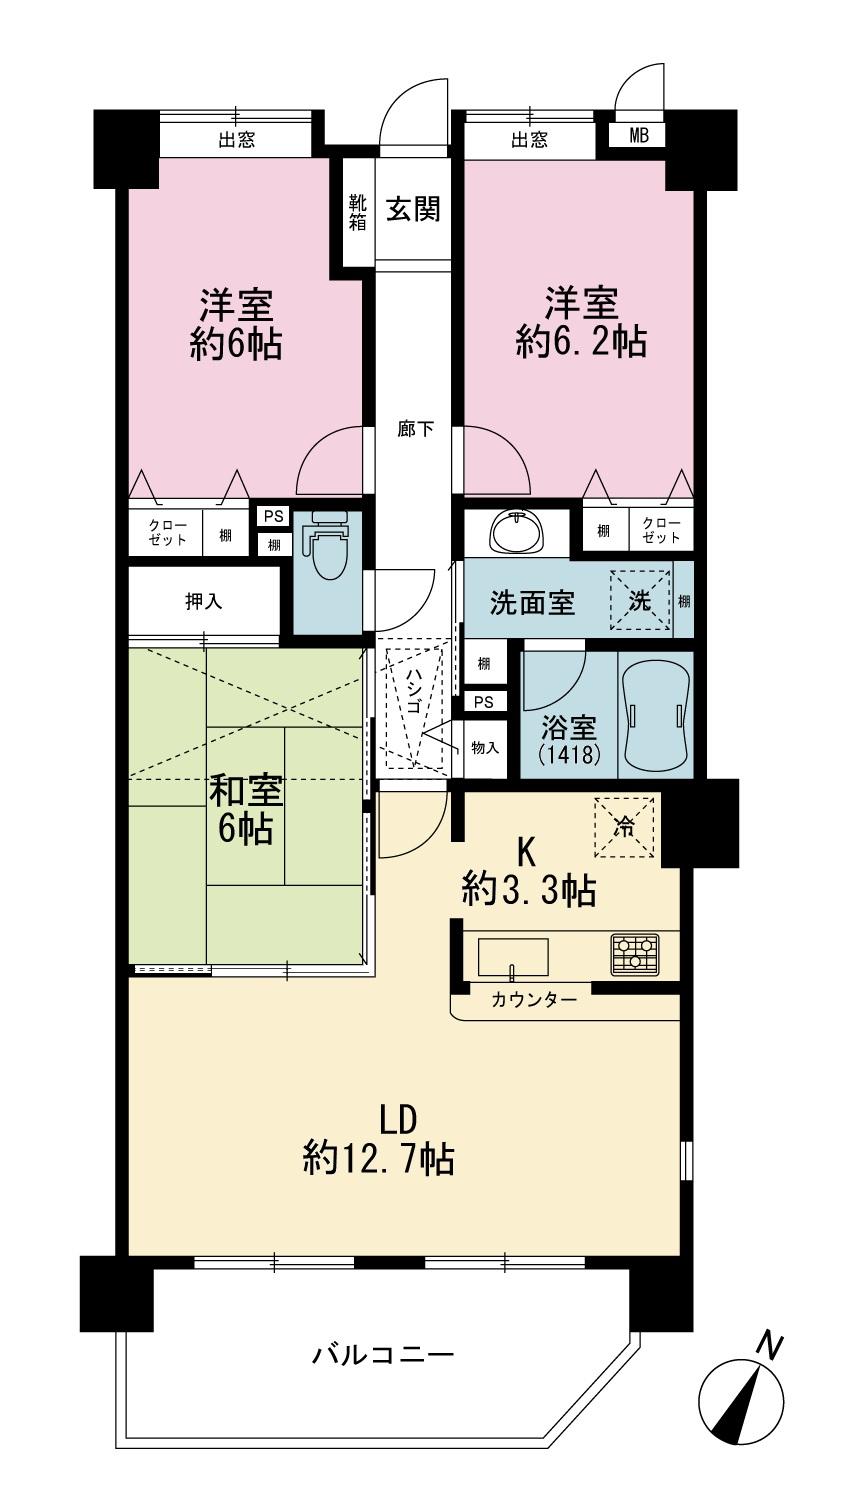 Floor plan. 3LDK, Price 18.5 million yen, Footprint 72.4 sq m , Balcony area 10.68 sq m